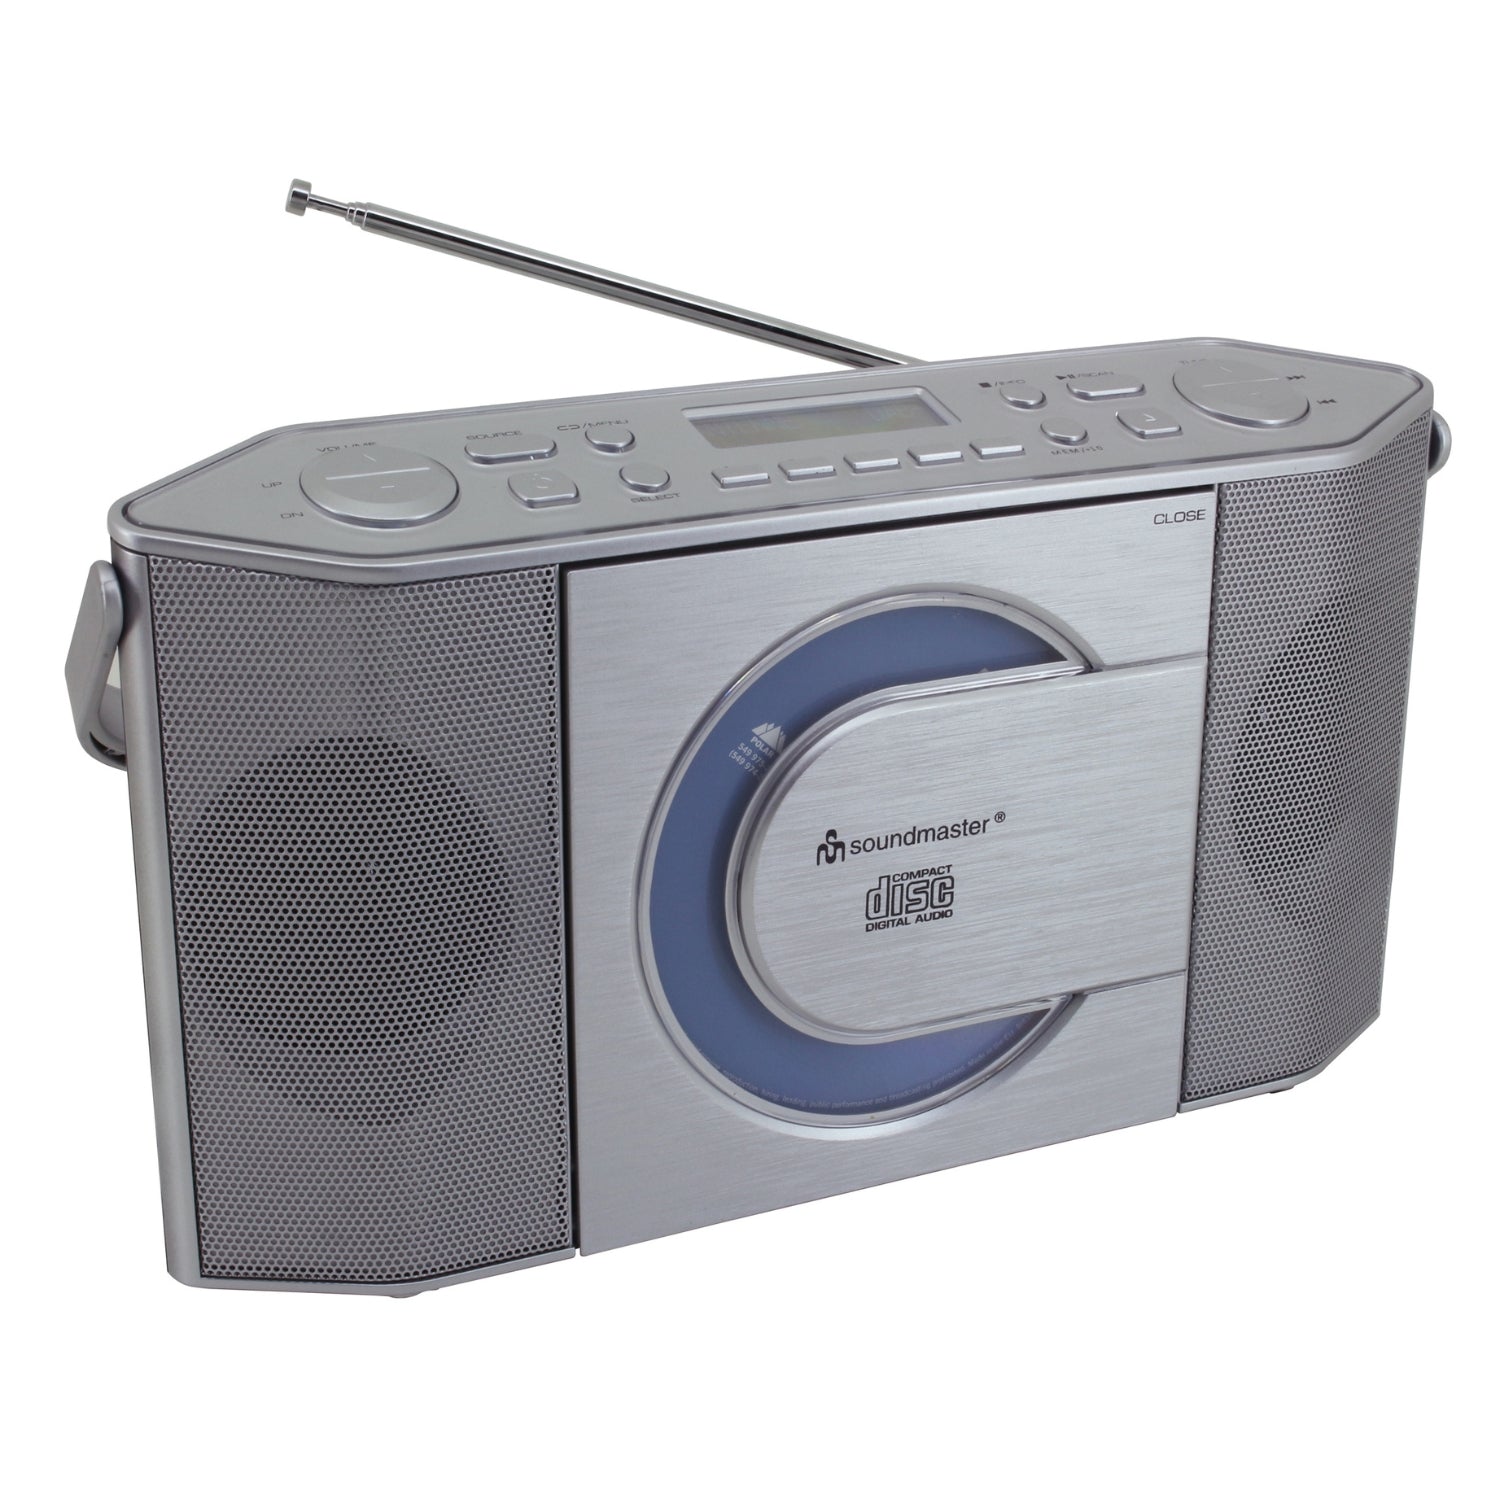 Soundmaster RCD1770SI digital radio radio recorder DAB+ with USB and CD player MP3 headphones clock